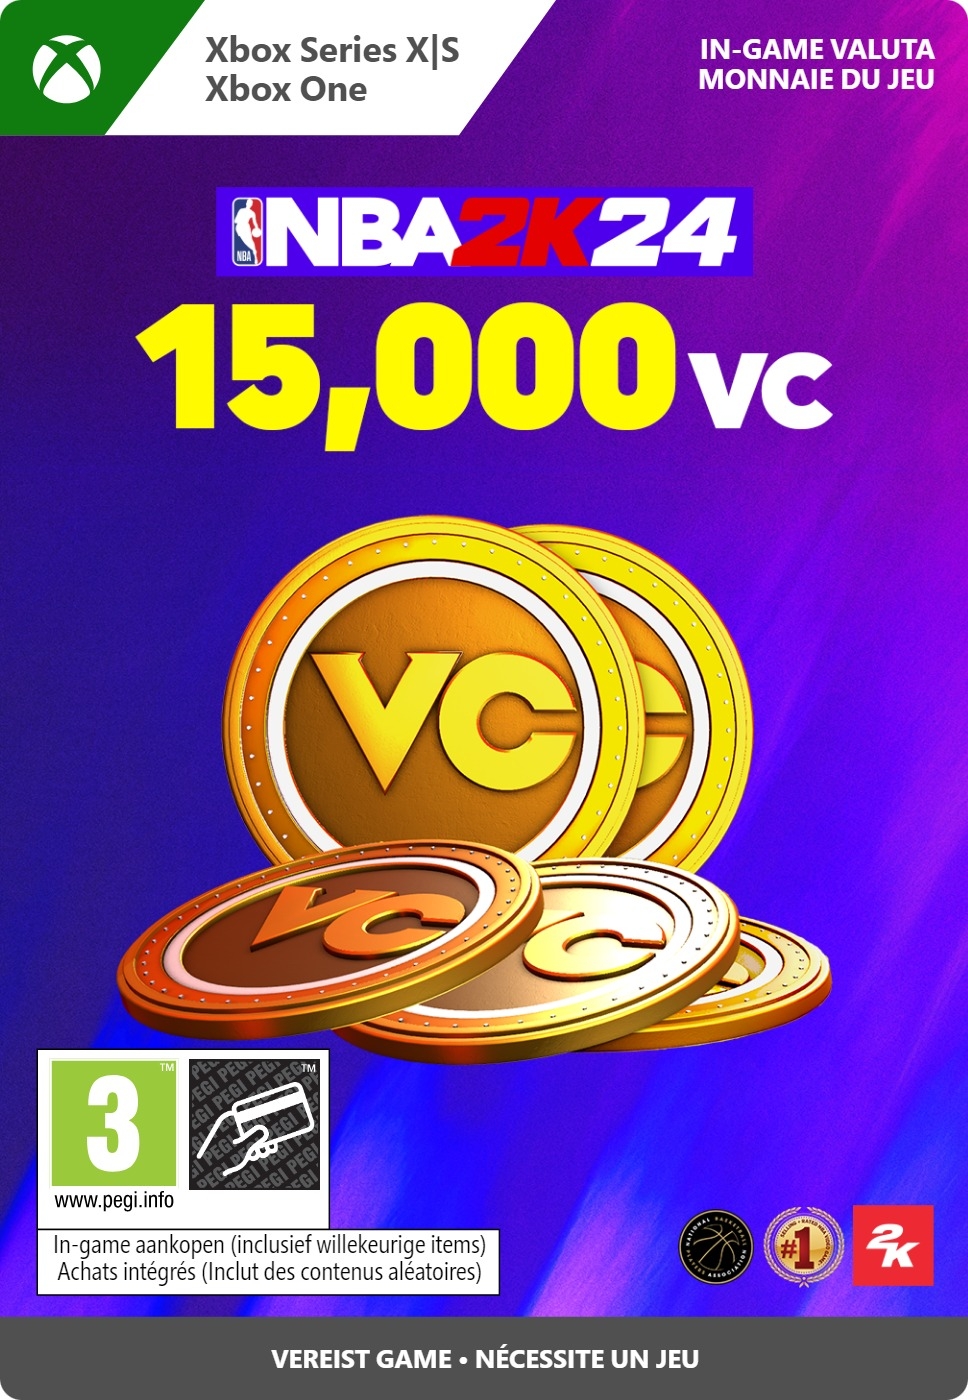 15.000 Xbox NBA 2K24 VC - Xbox Series X|S/One XboxLiveKaarten.nl (direct digitaal geleverd)